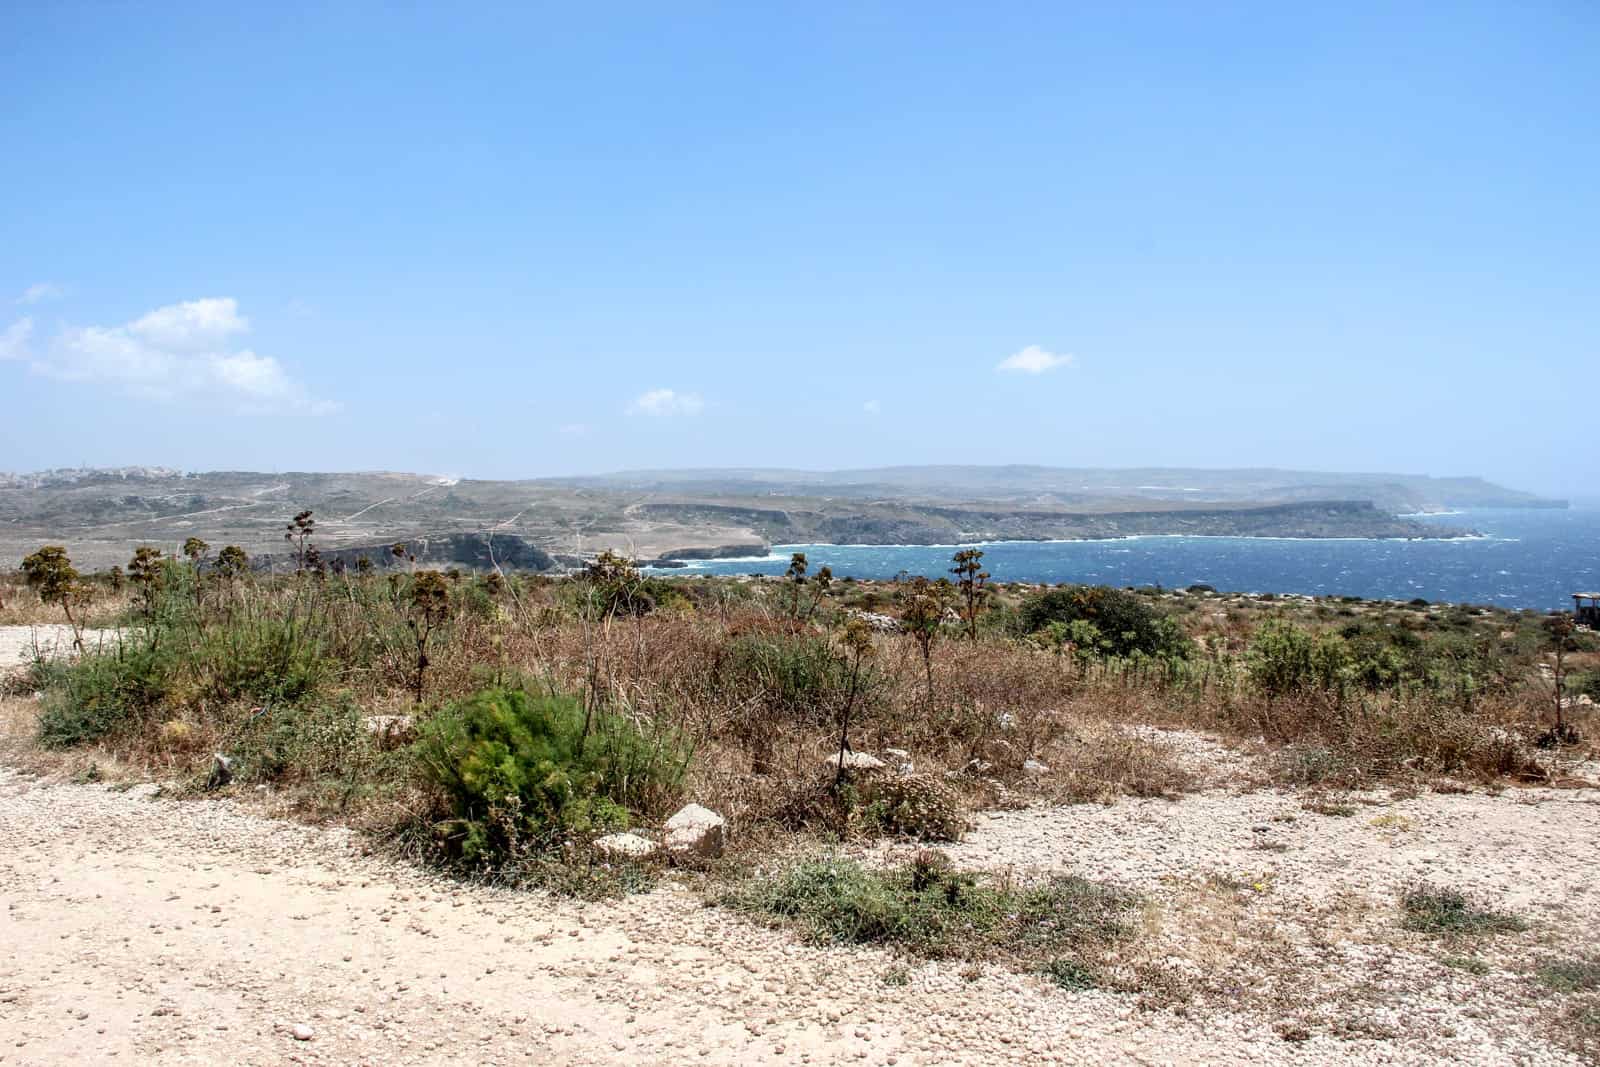 The rugged coastline of South Malta